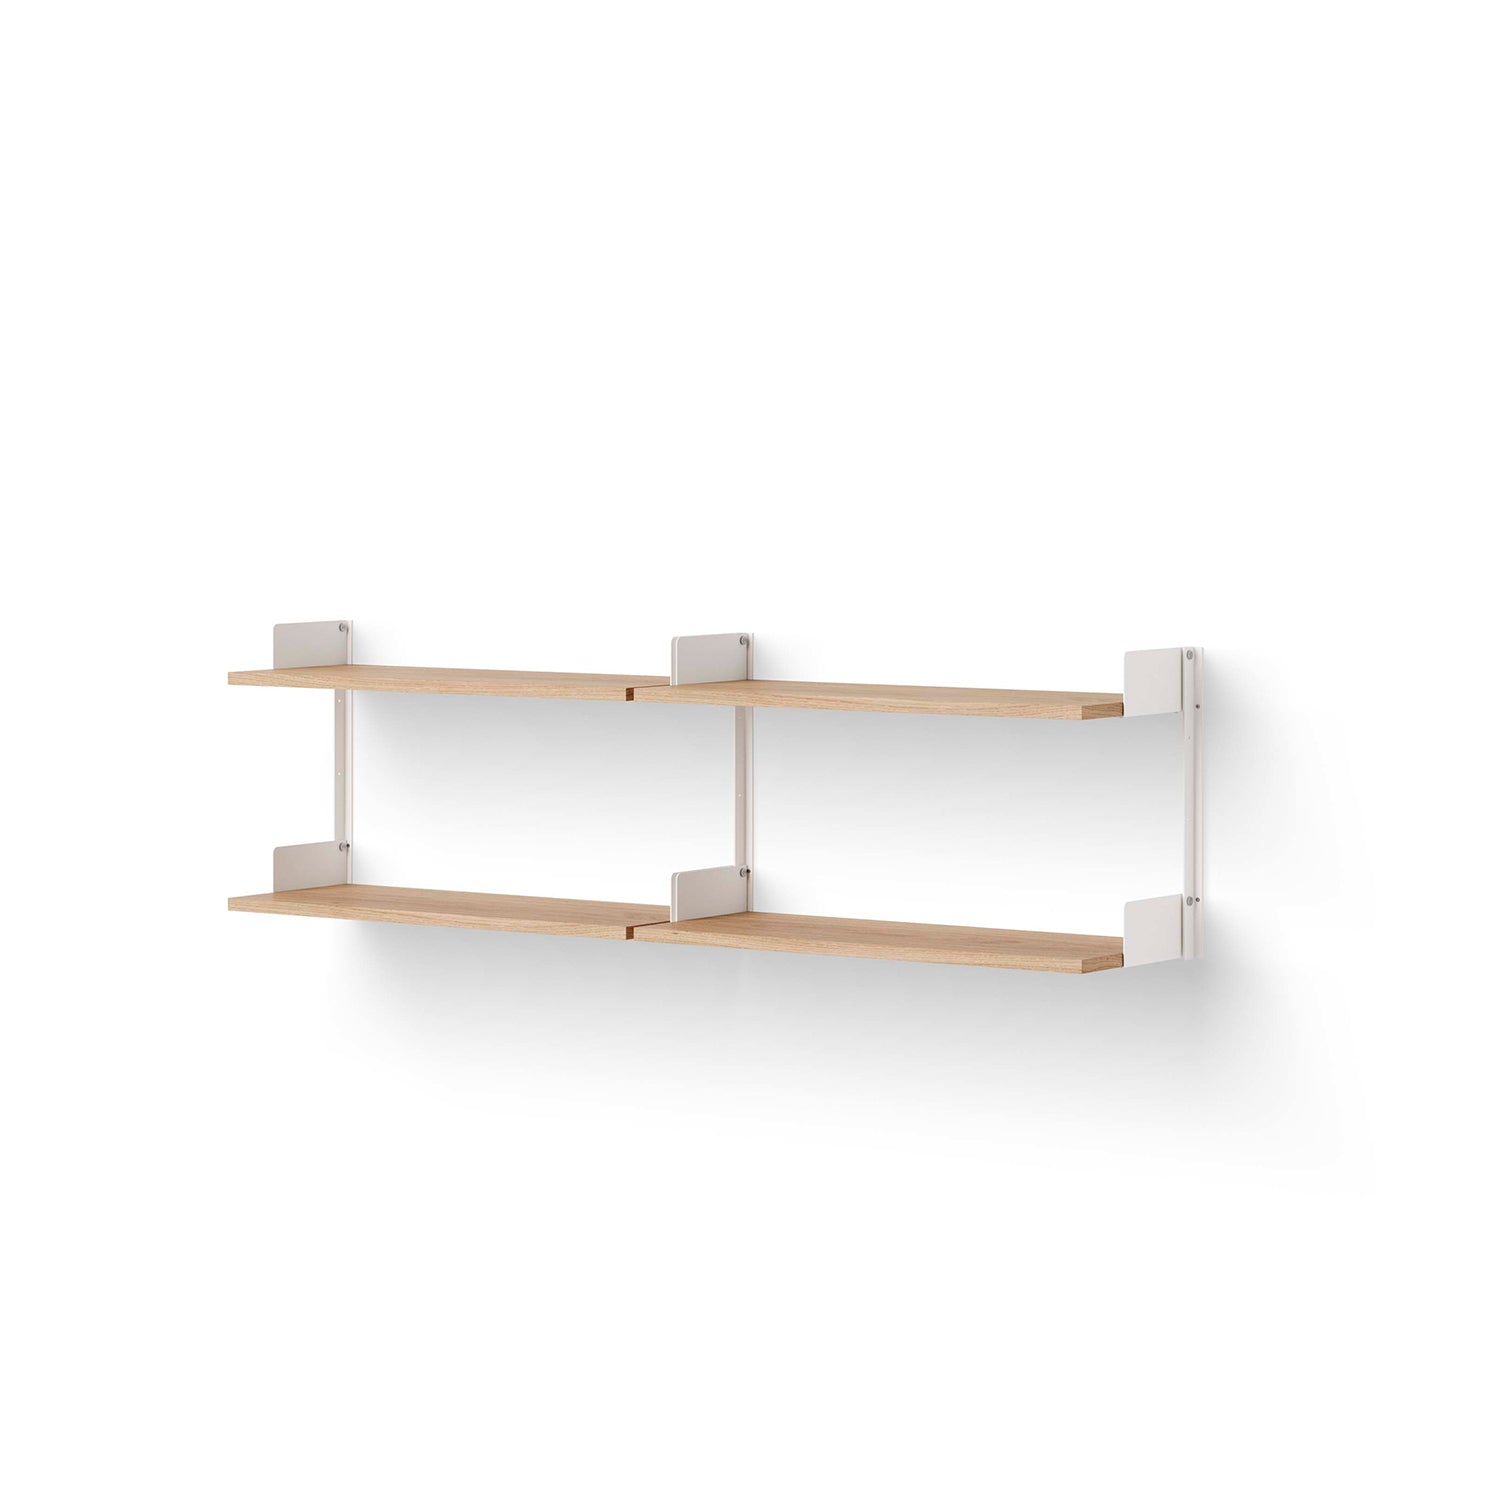 Chamber Shelf - The Design Choice